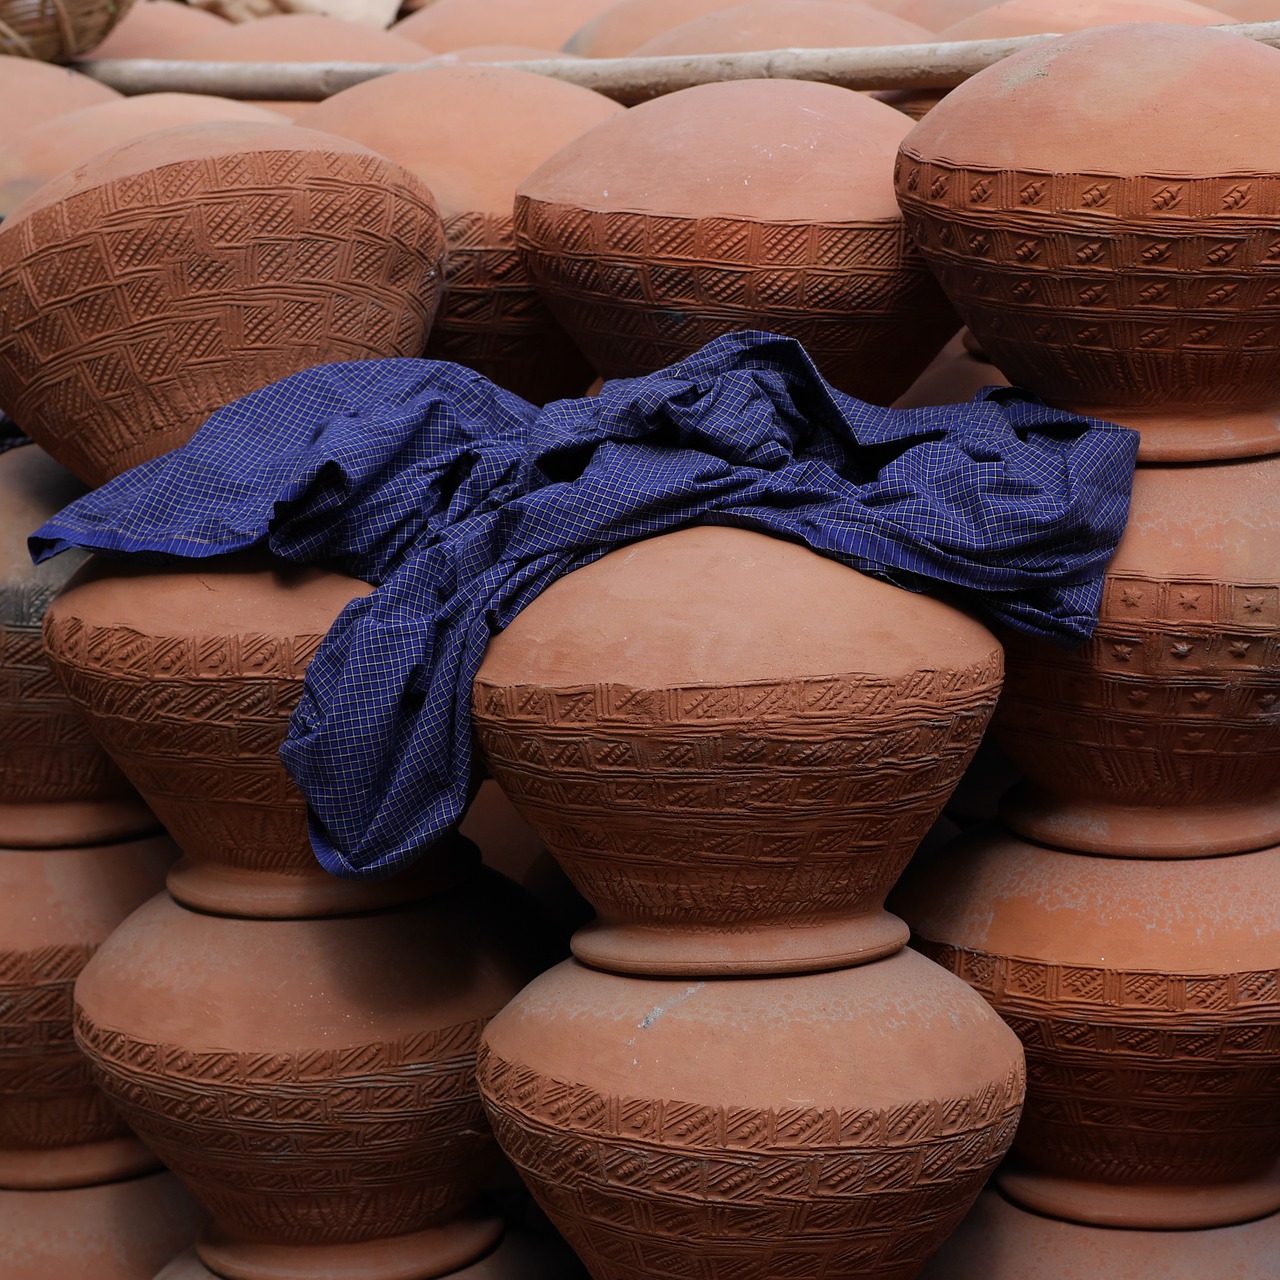 pottery amphora clay pots free photo